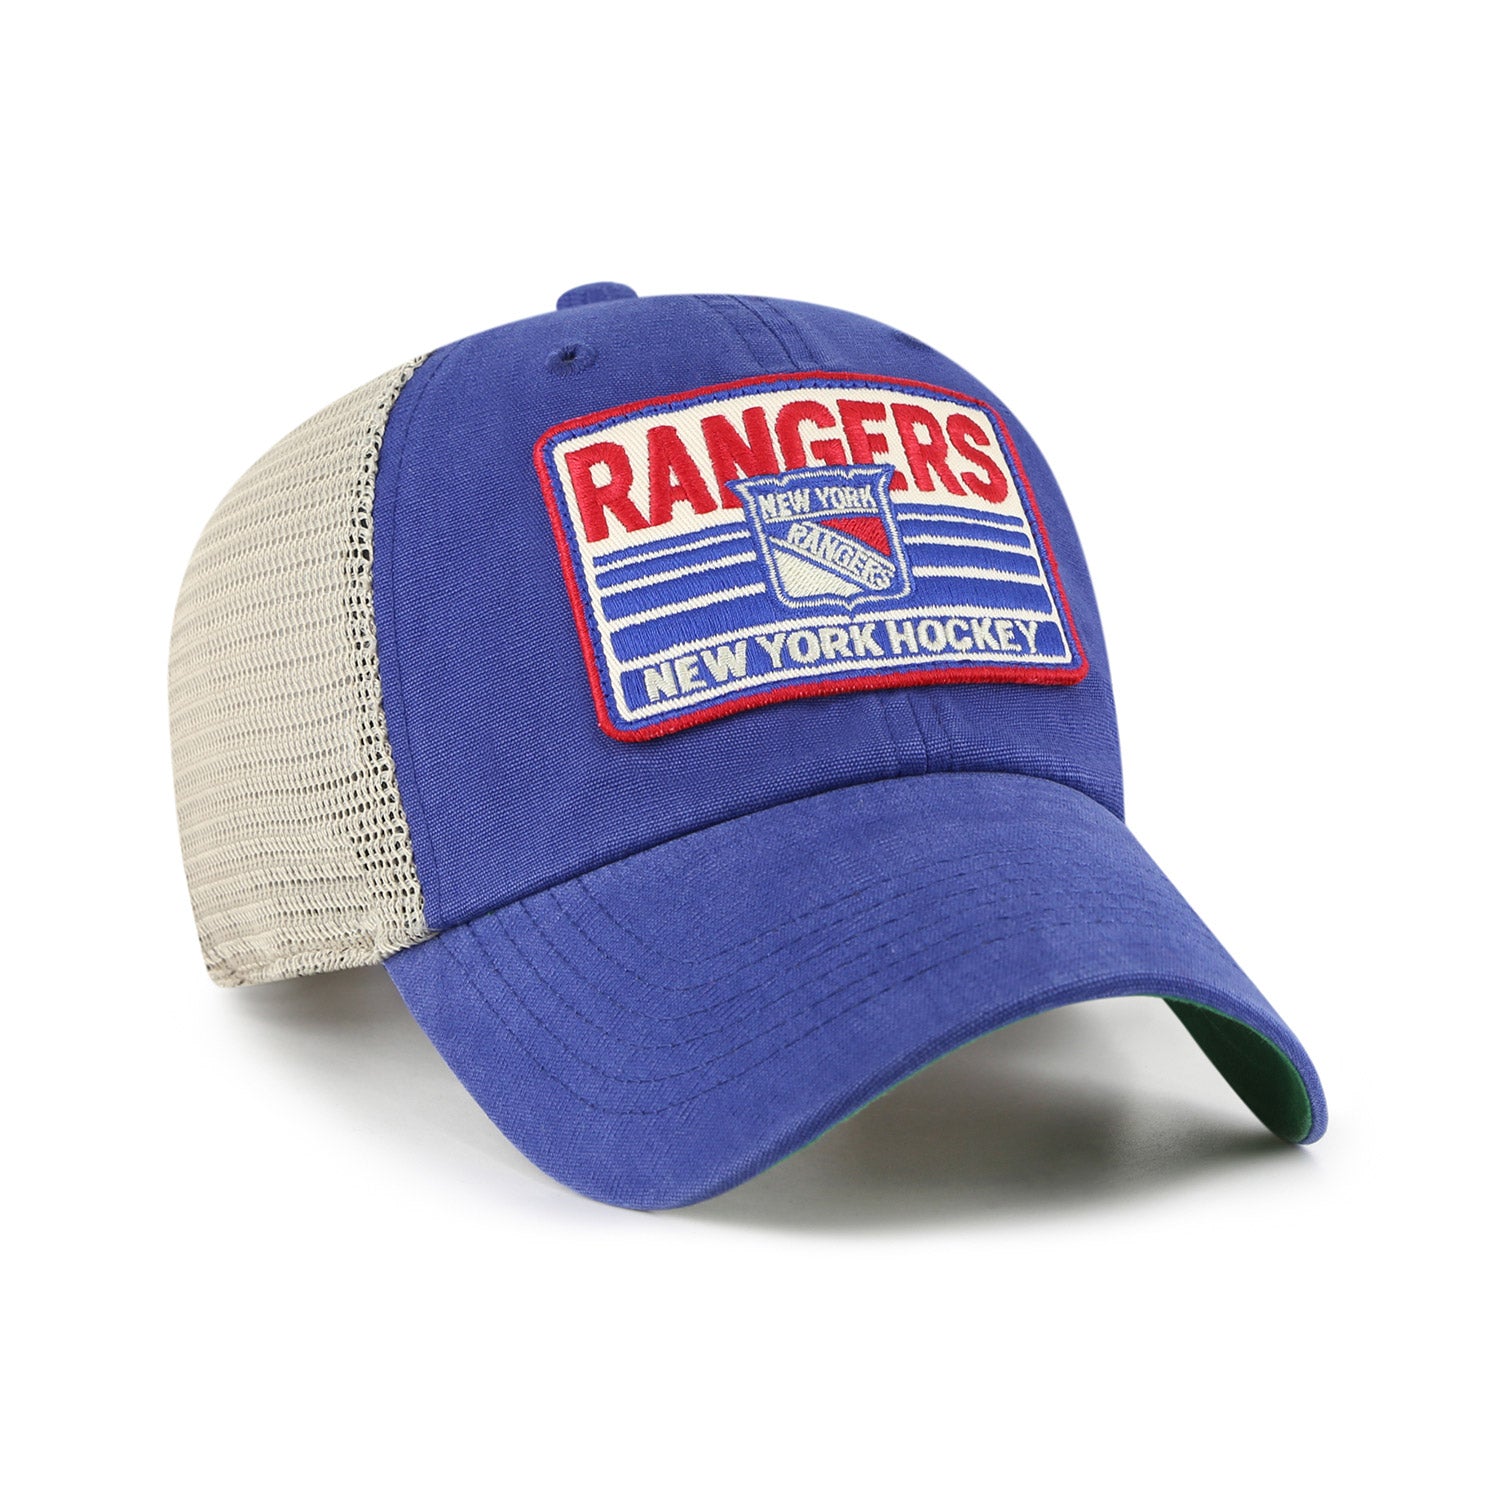 NHL New York Rangers RBK Reebok Adult Structured Flex Fit Cap Hat NEW